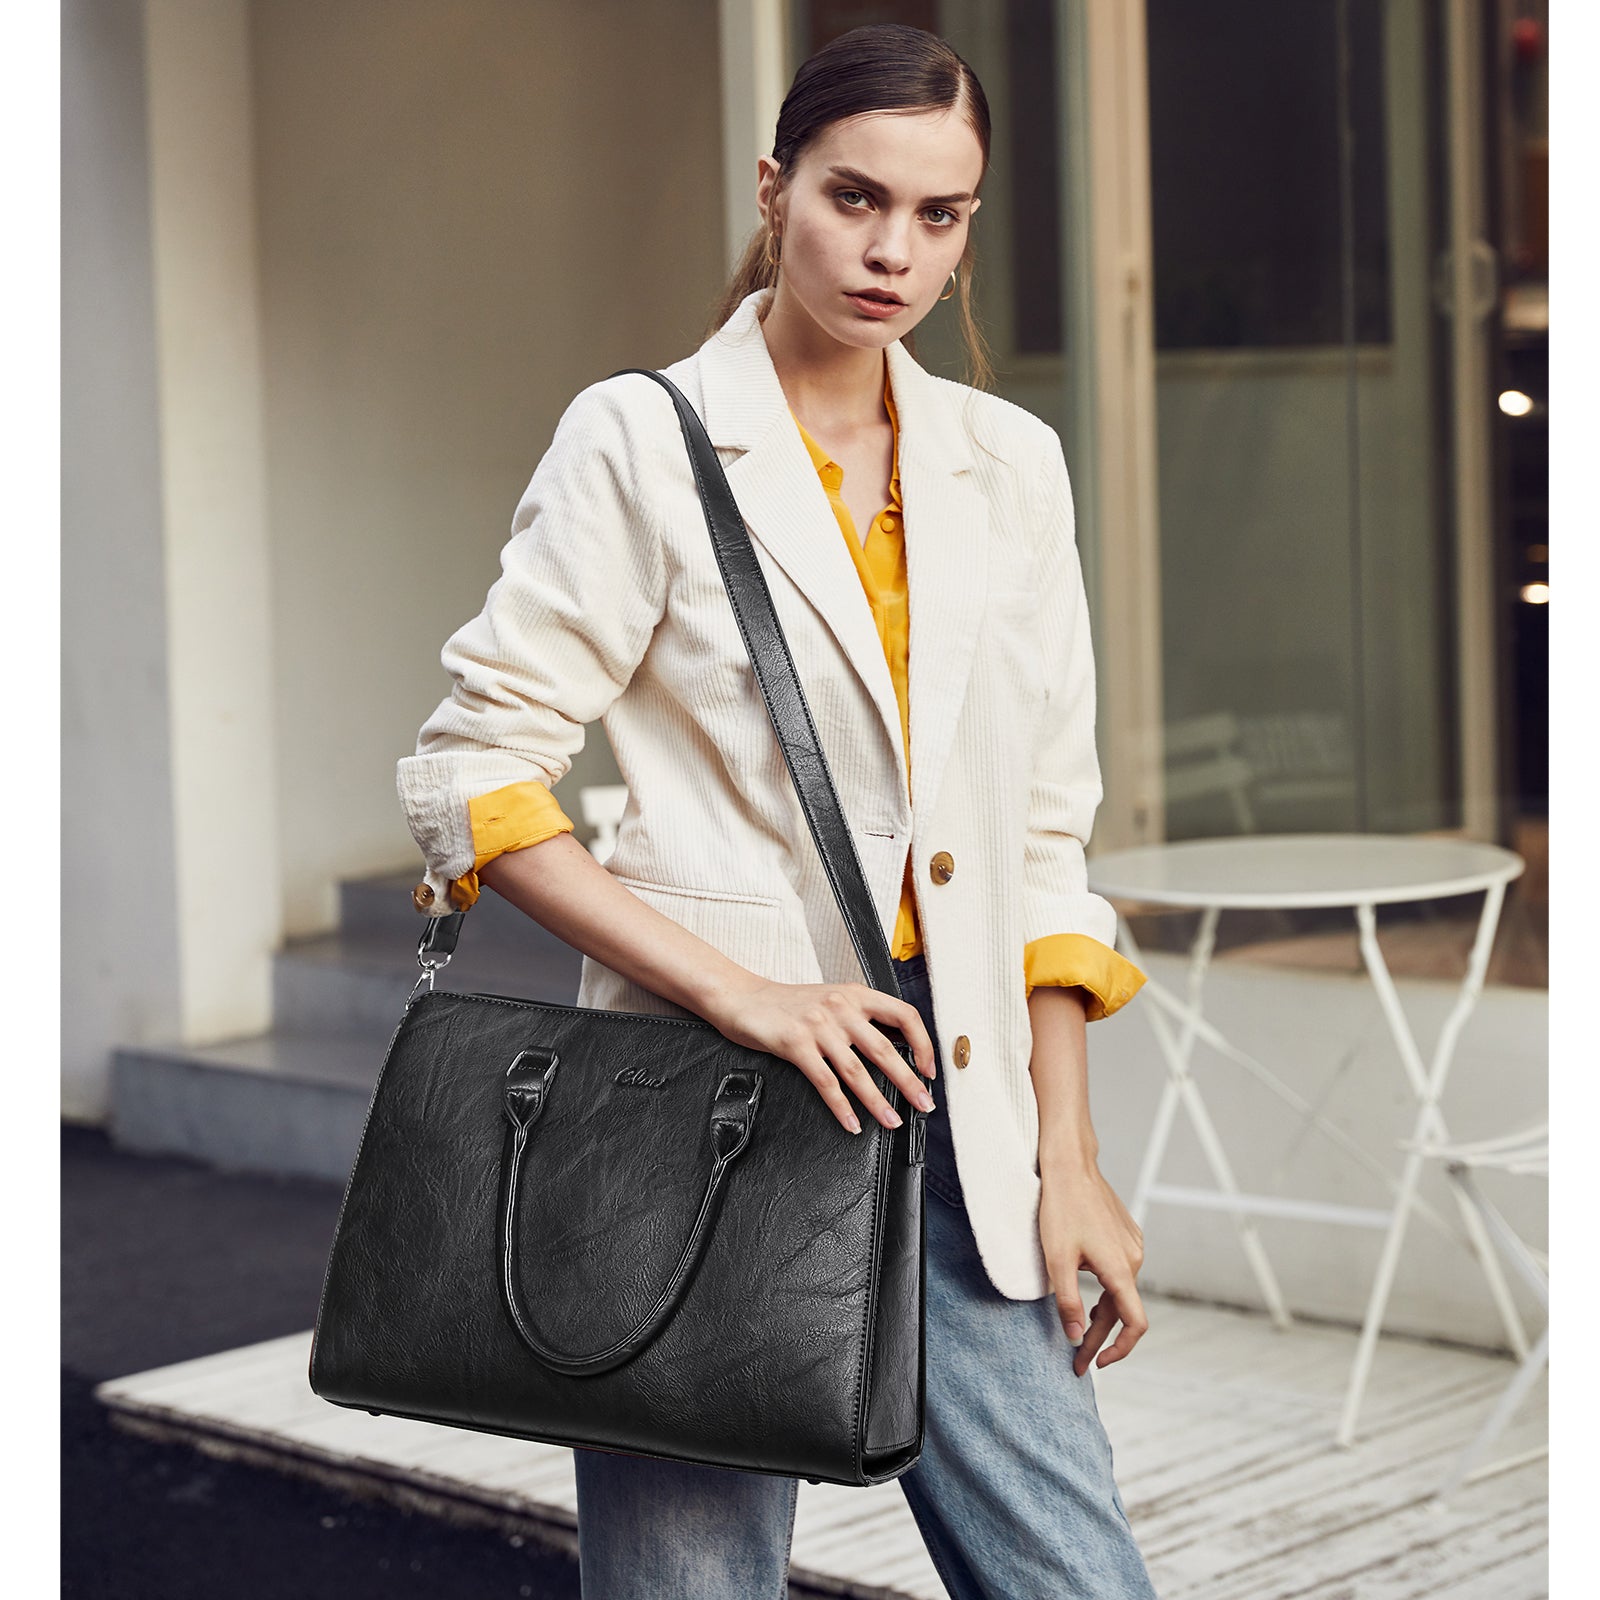 Zara bag in England | Handbags, Purses & Women's Bags for Sale | Gumtree